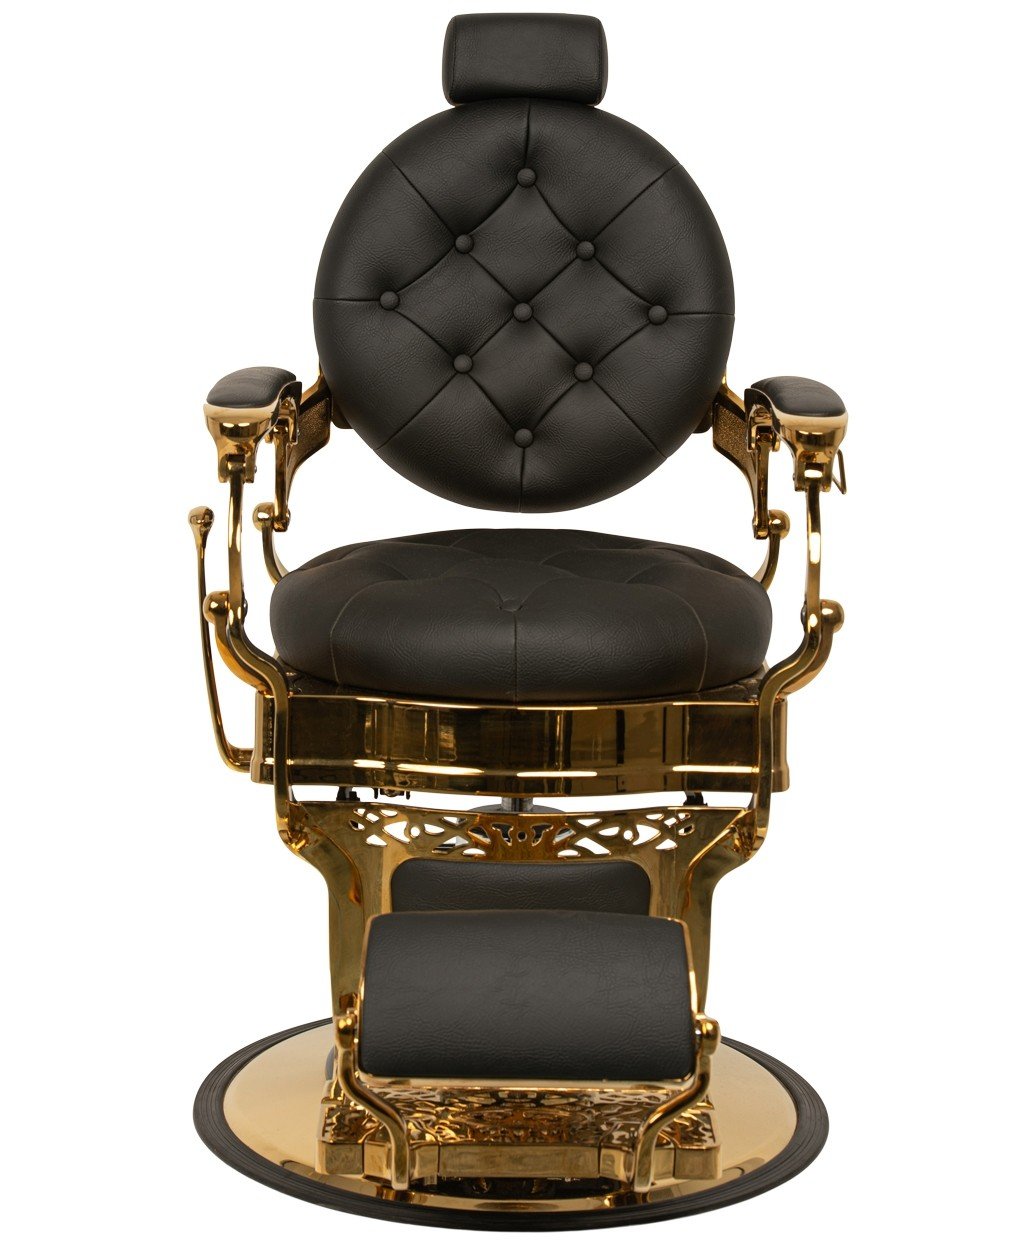 Caesar Gold Professional Barber Chair